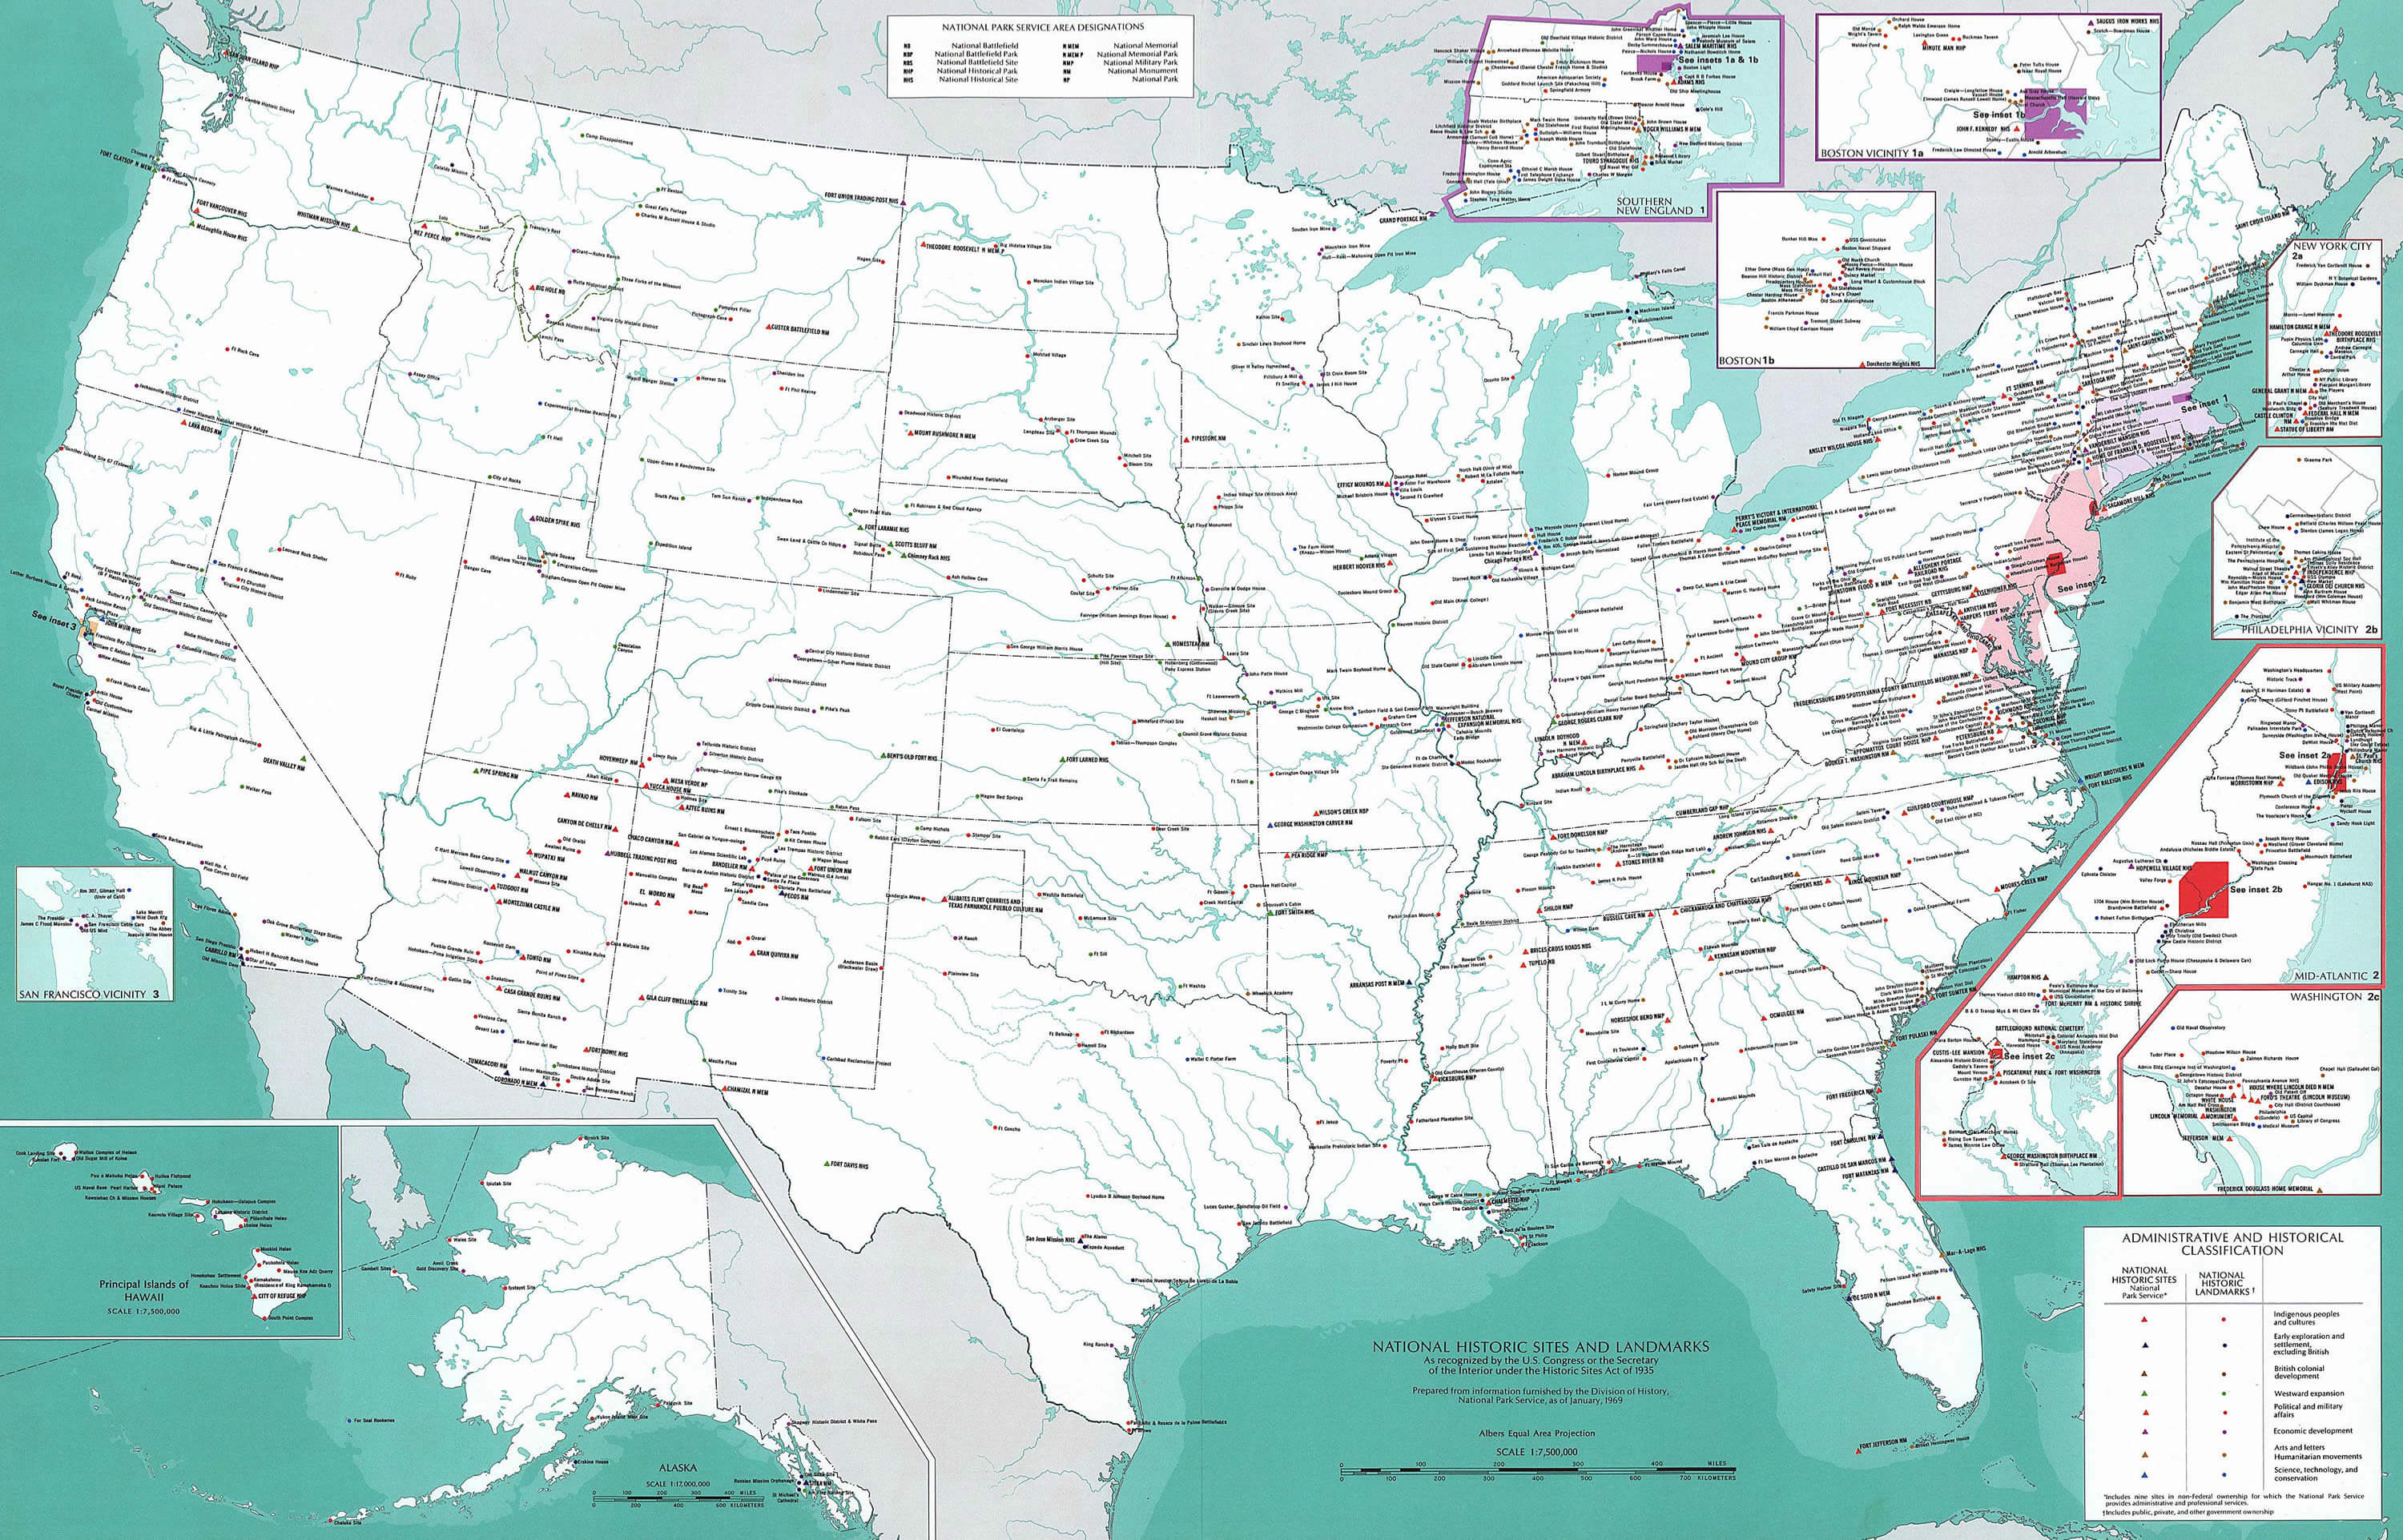 Vereinigte Staaten historisch sites karte